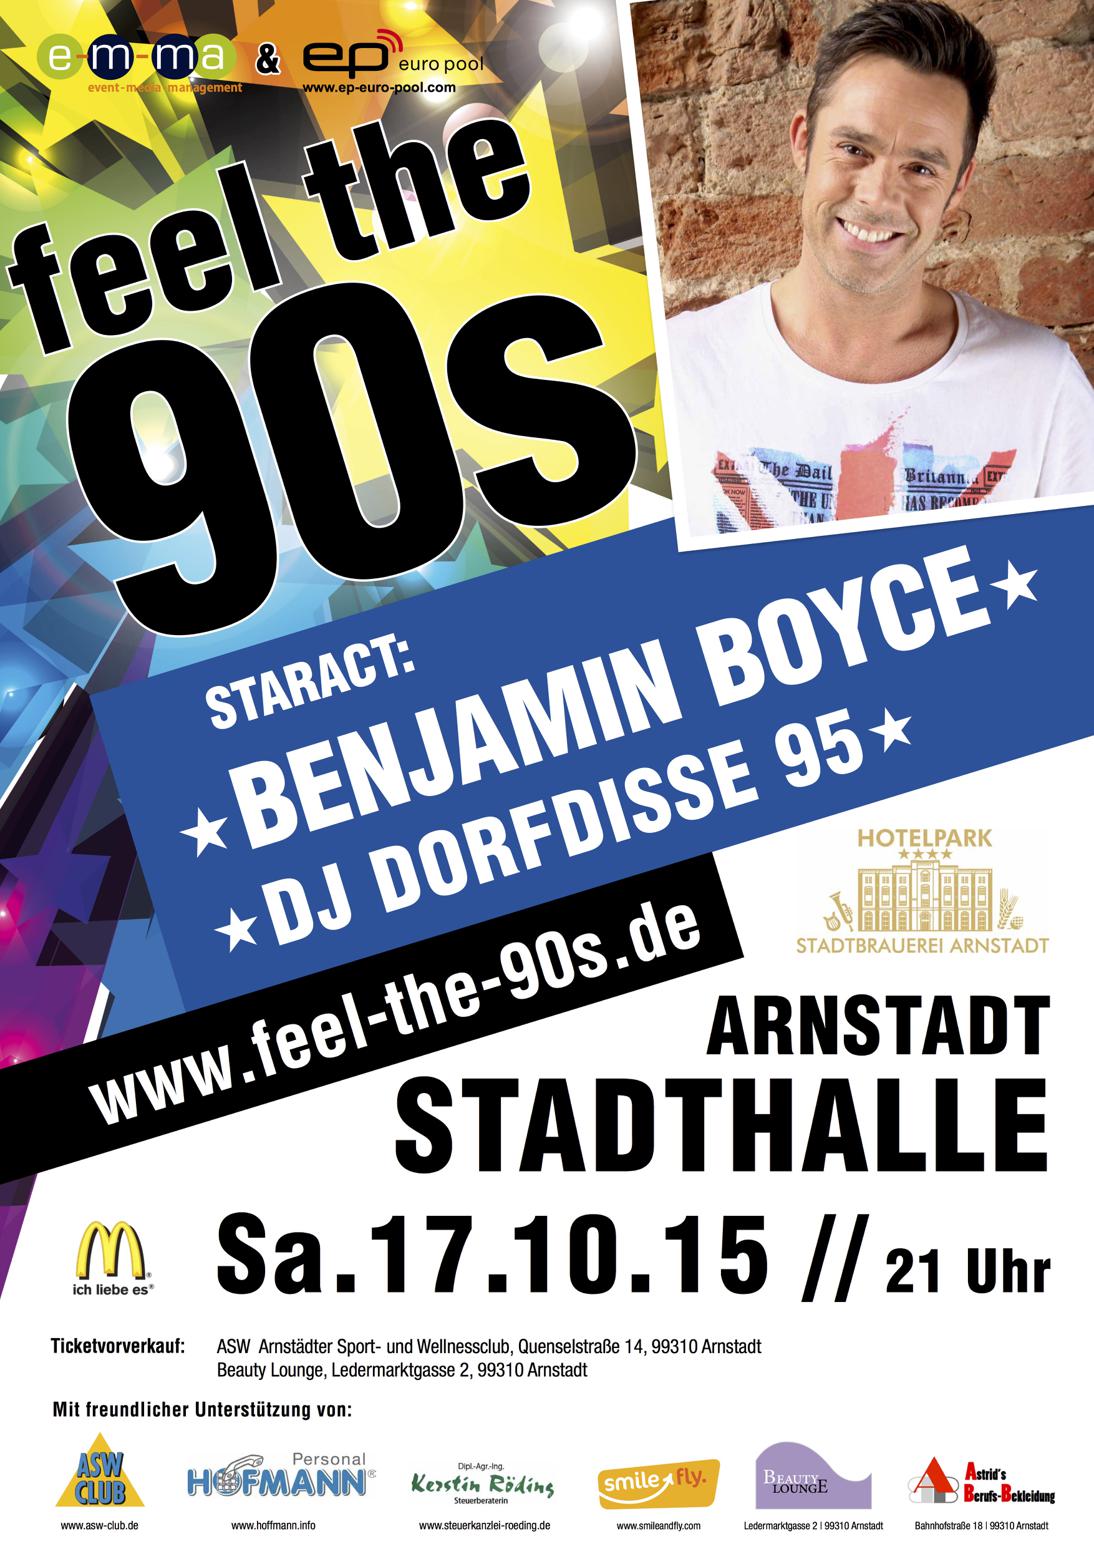 FEEL THE 90s - Staract: Benjamin Boyce & DJ Dorfdisse 95 - Thüringens größte 90er Party